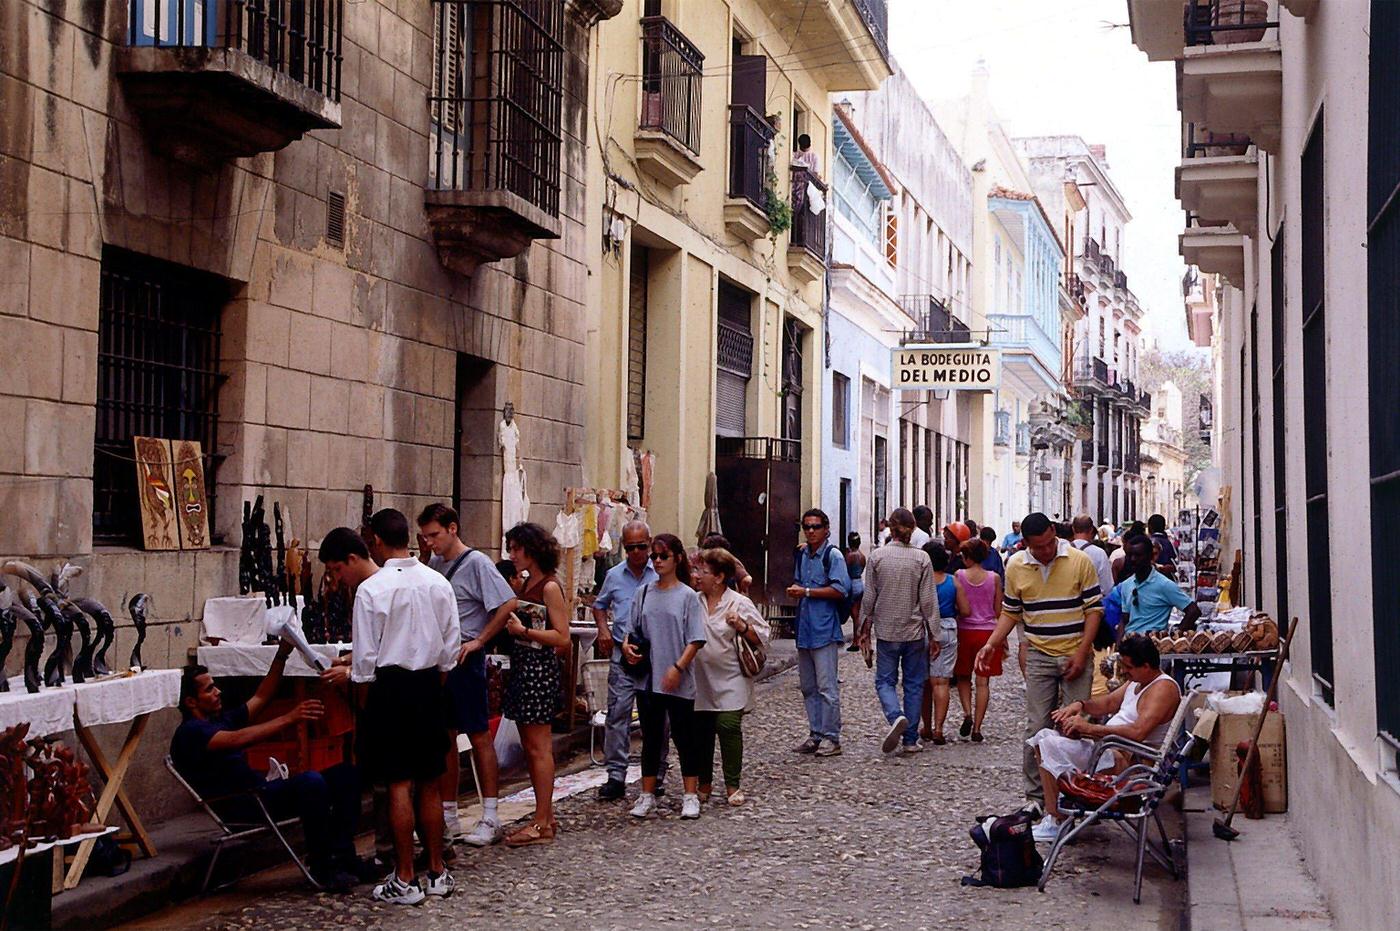 Old town scene with the entrance to "Bodeguita del Medio" in Havana, Cuba, 1997.